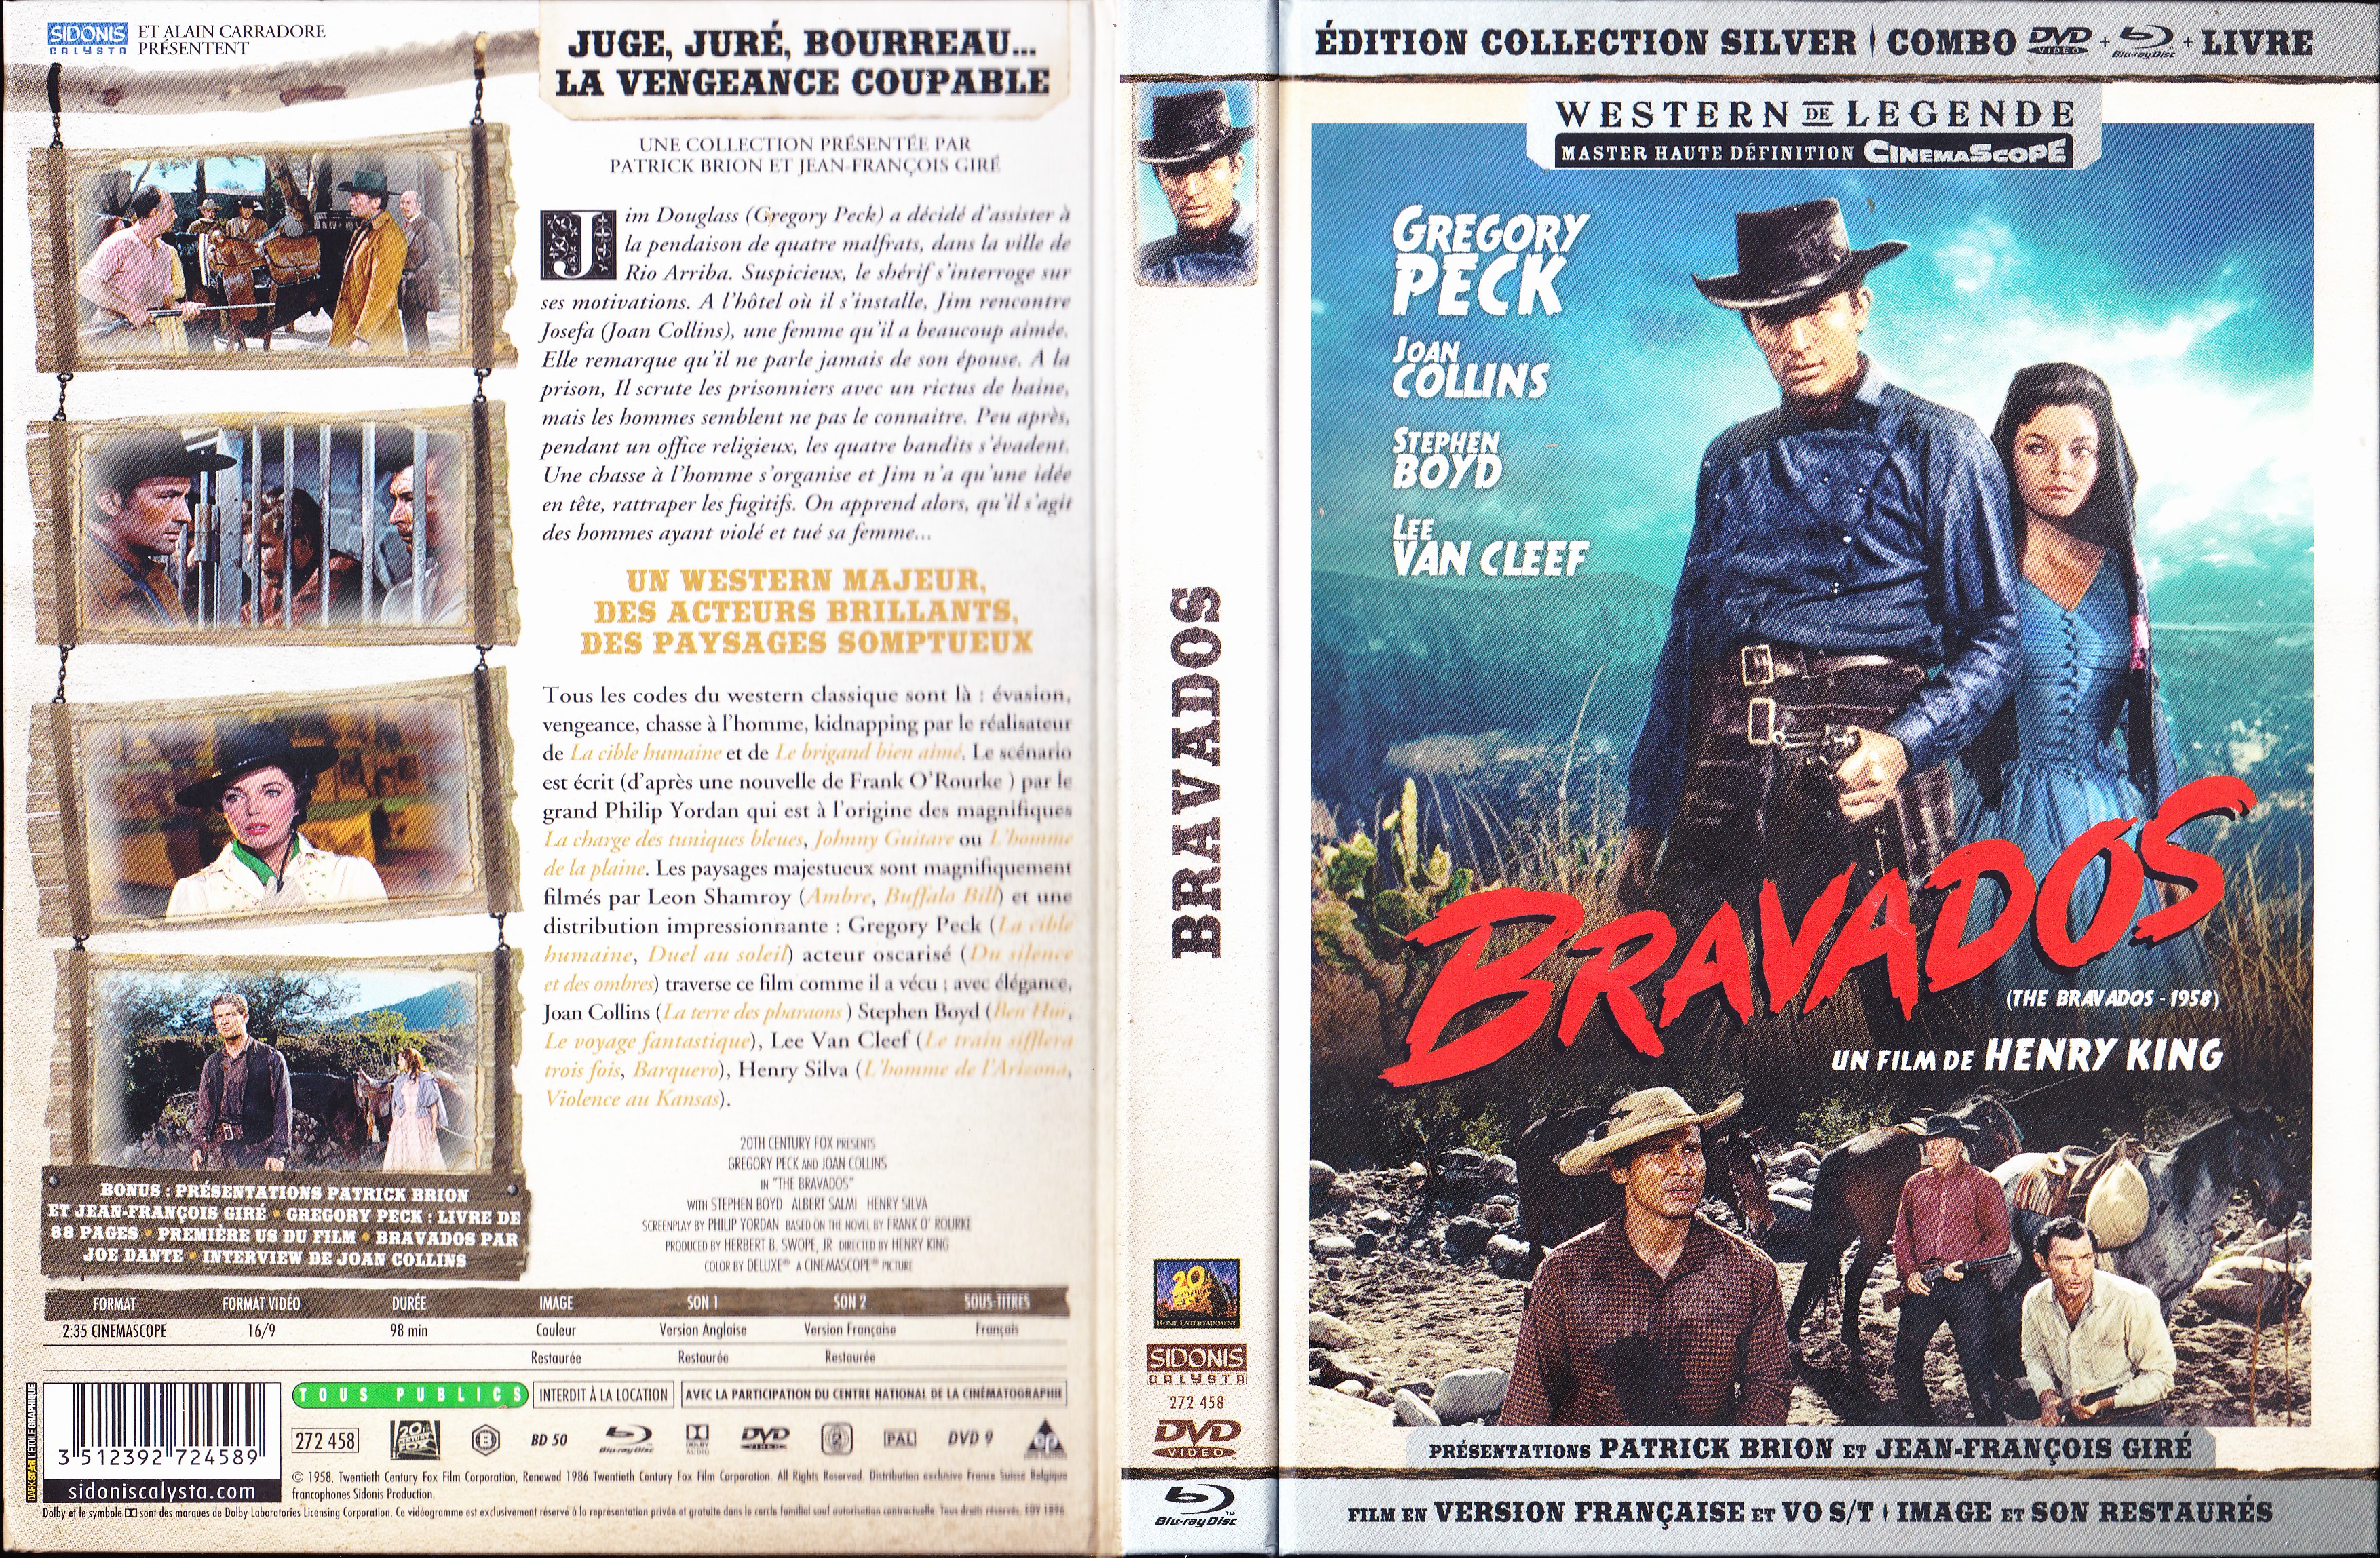 Jaquette DVD Bravados (BLU-RAY)